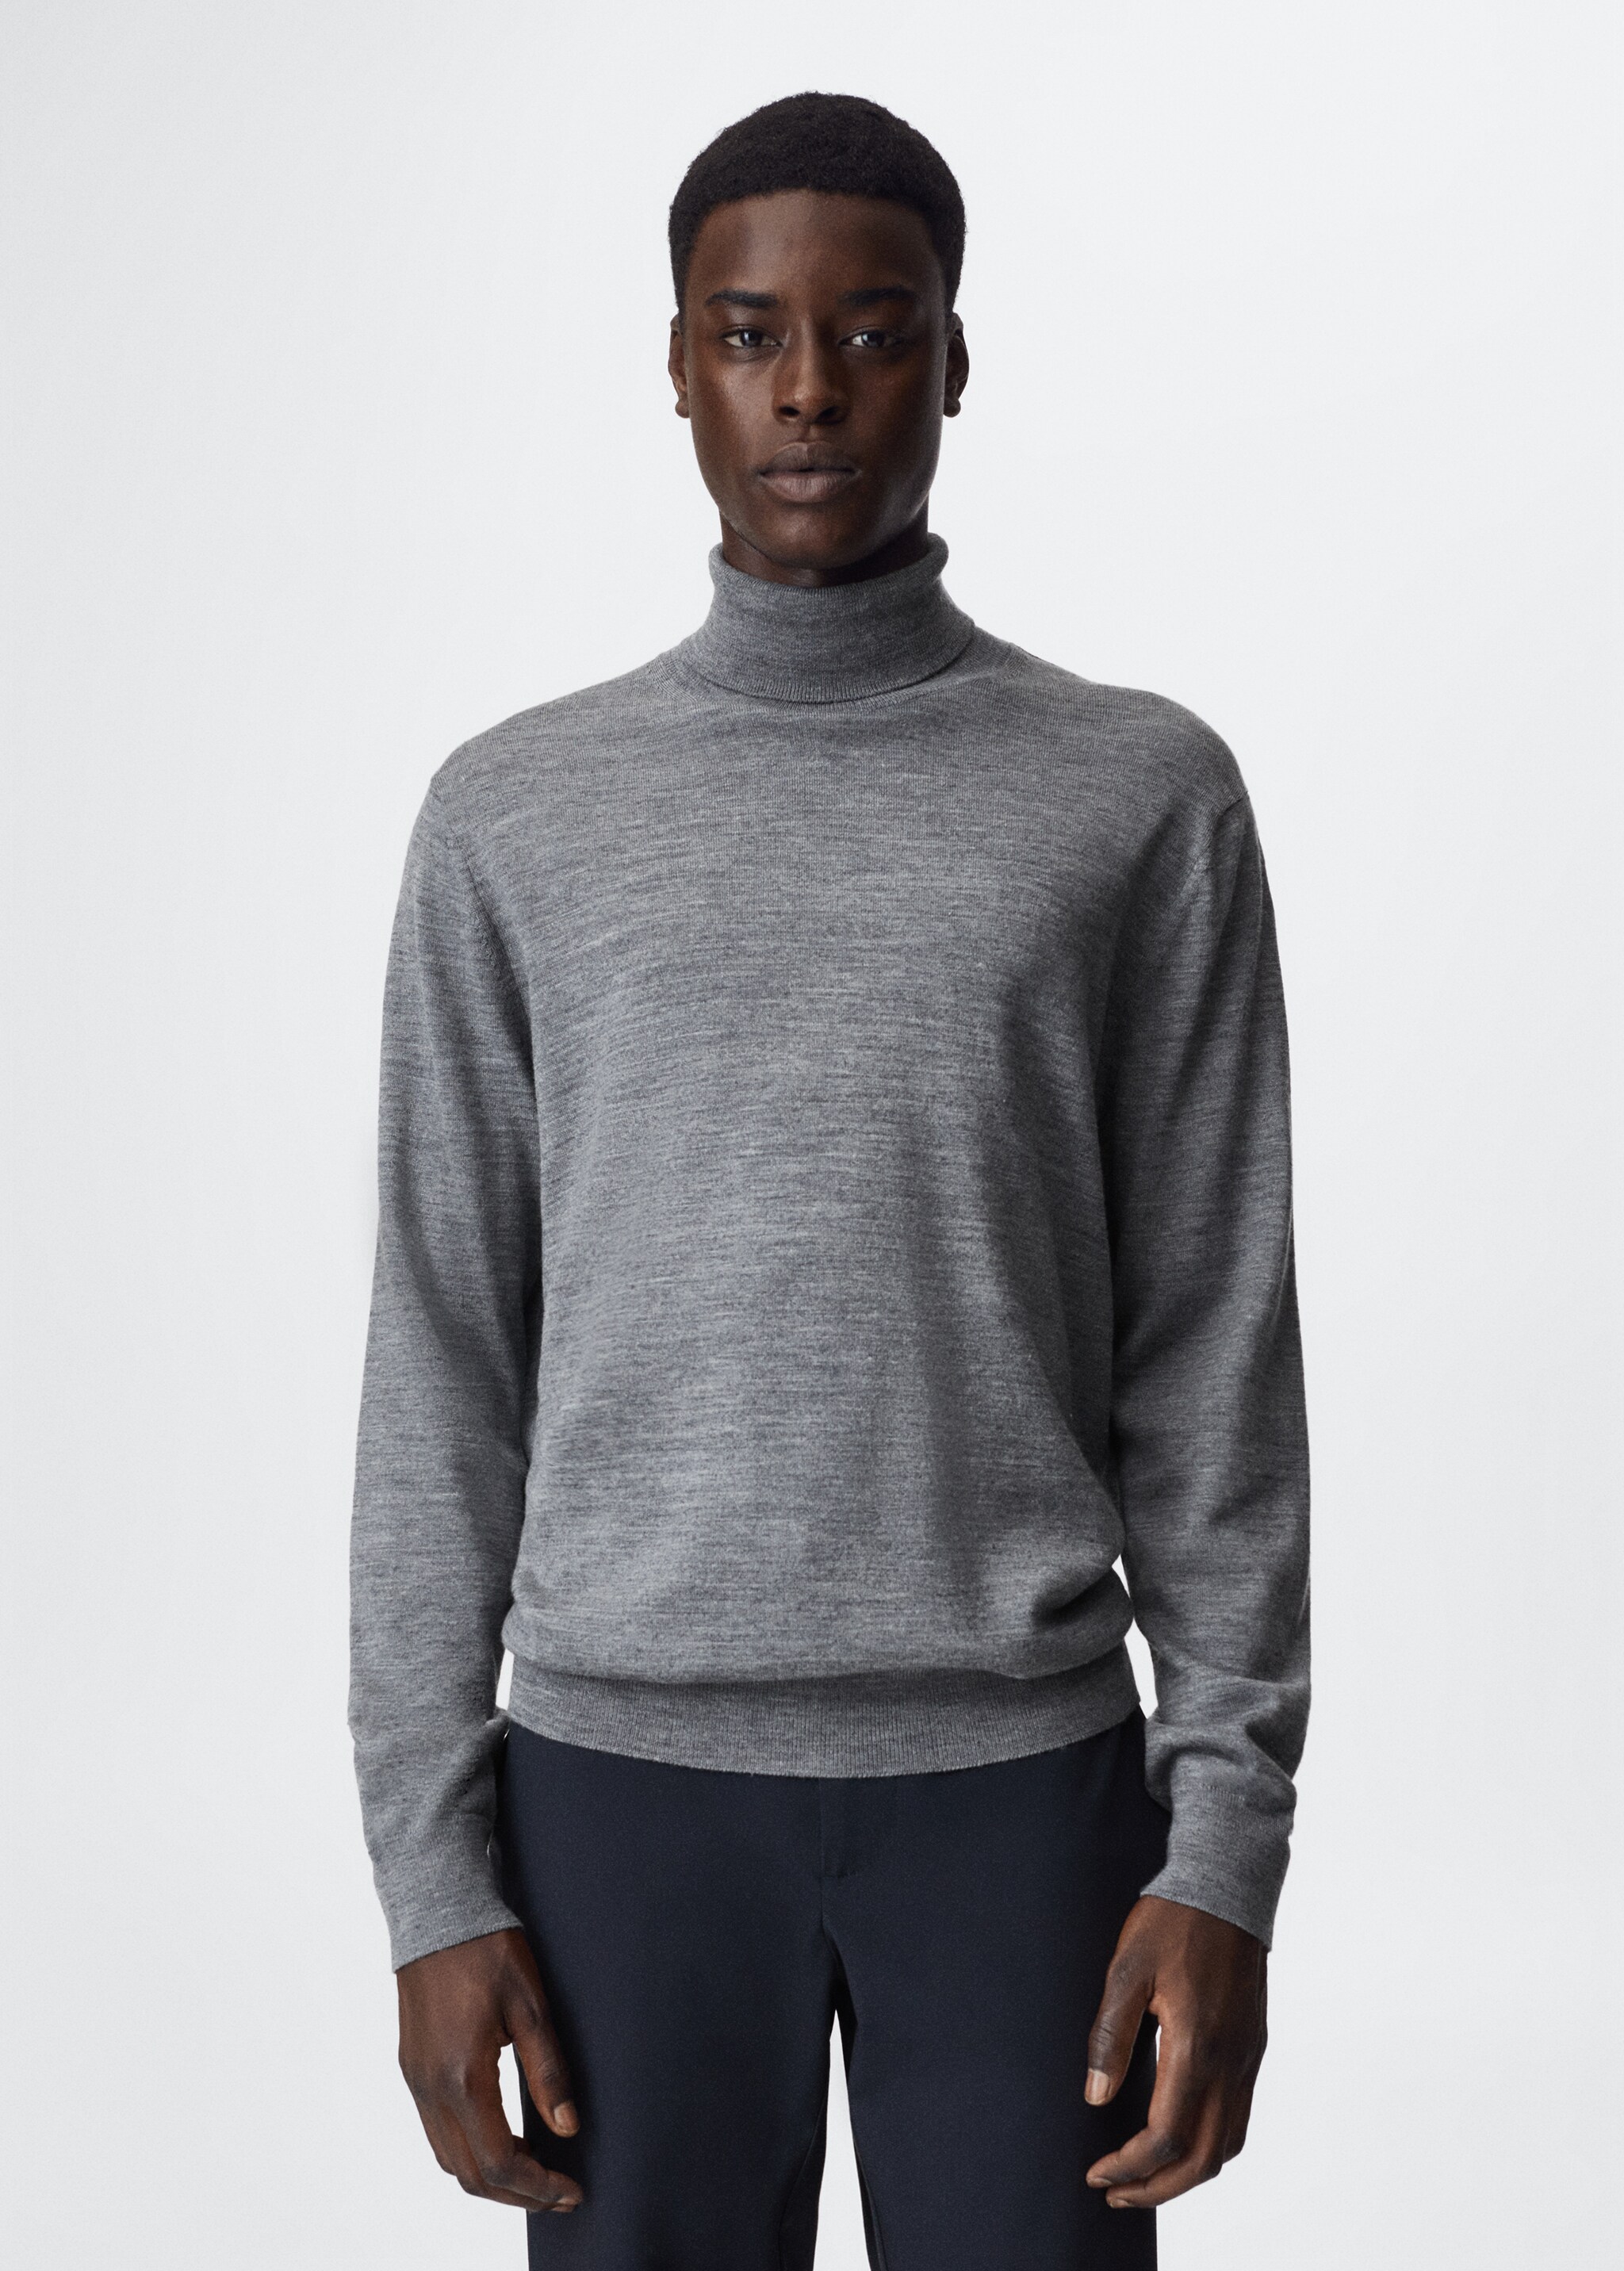 Turtleneck wool sweater - Medium plane